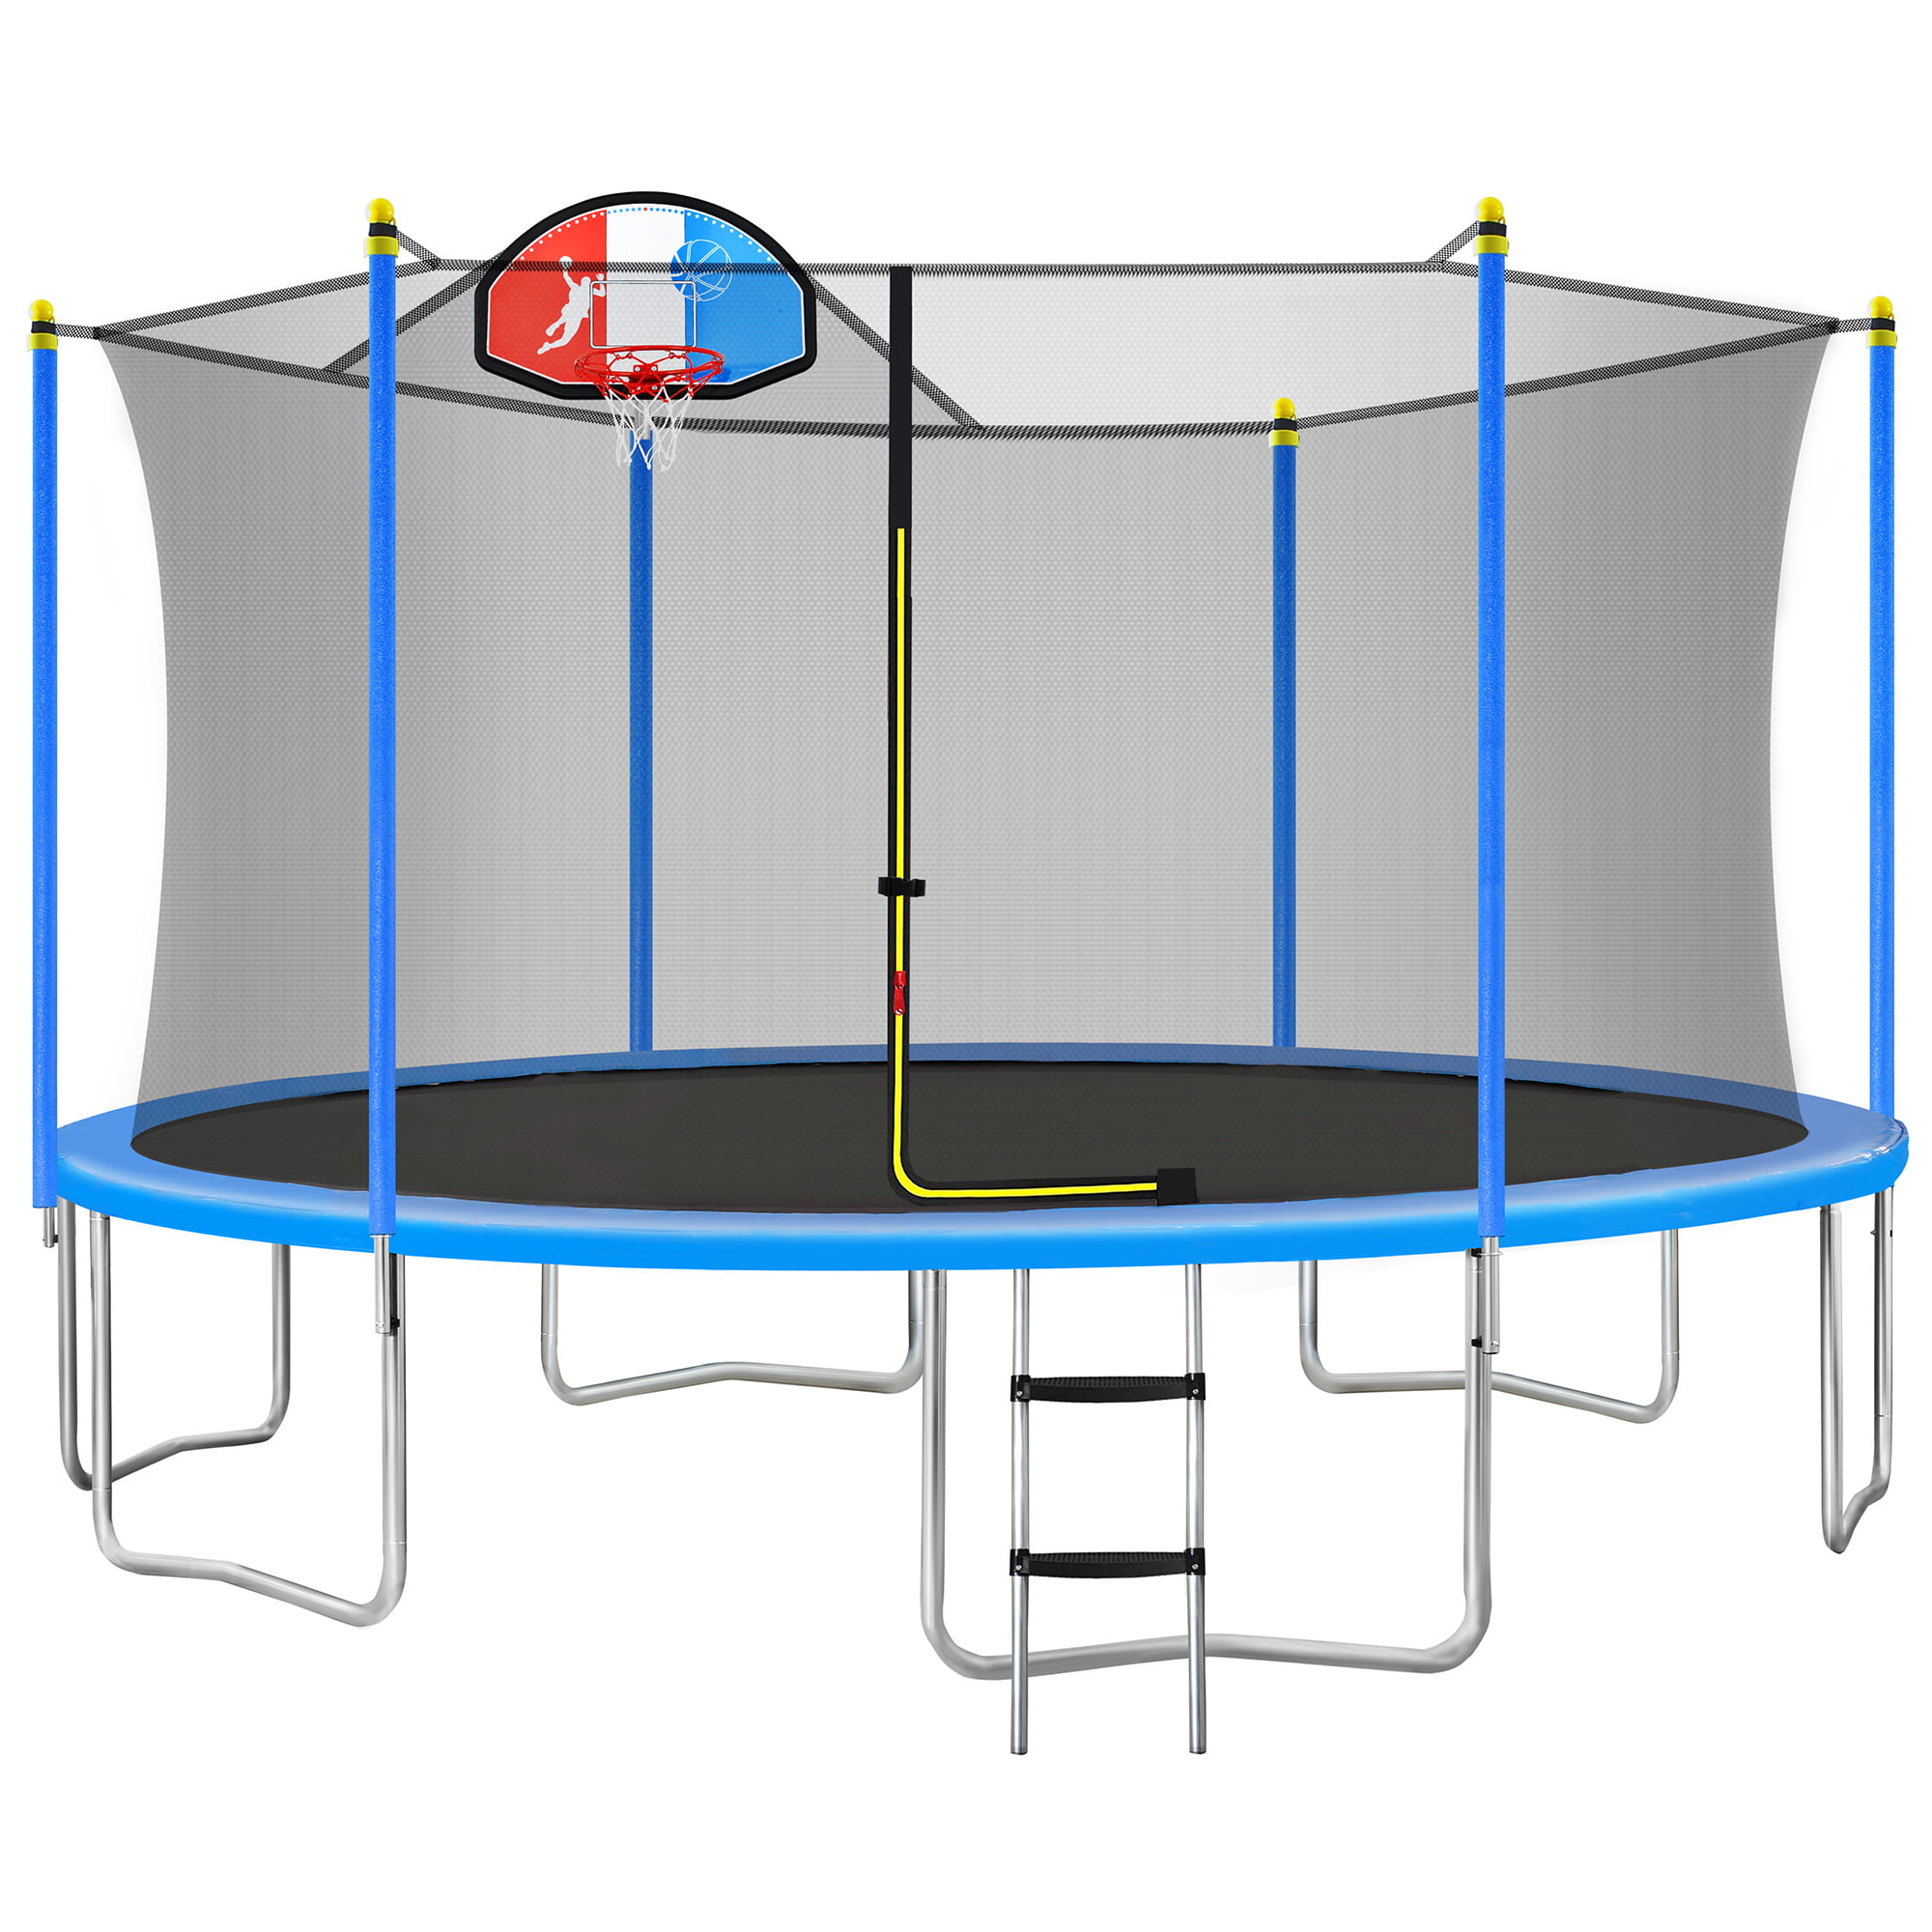 New 6 X top cap for enclosure Plum trampoline spare parts x 1 black NO POLE 